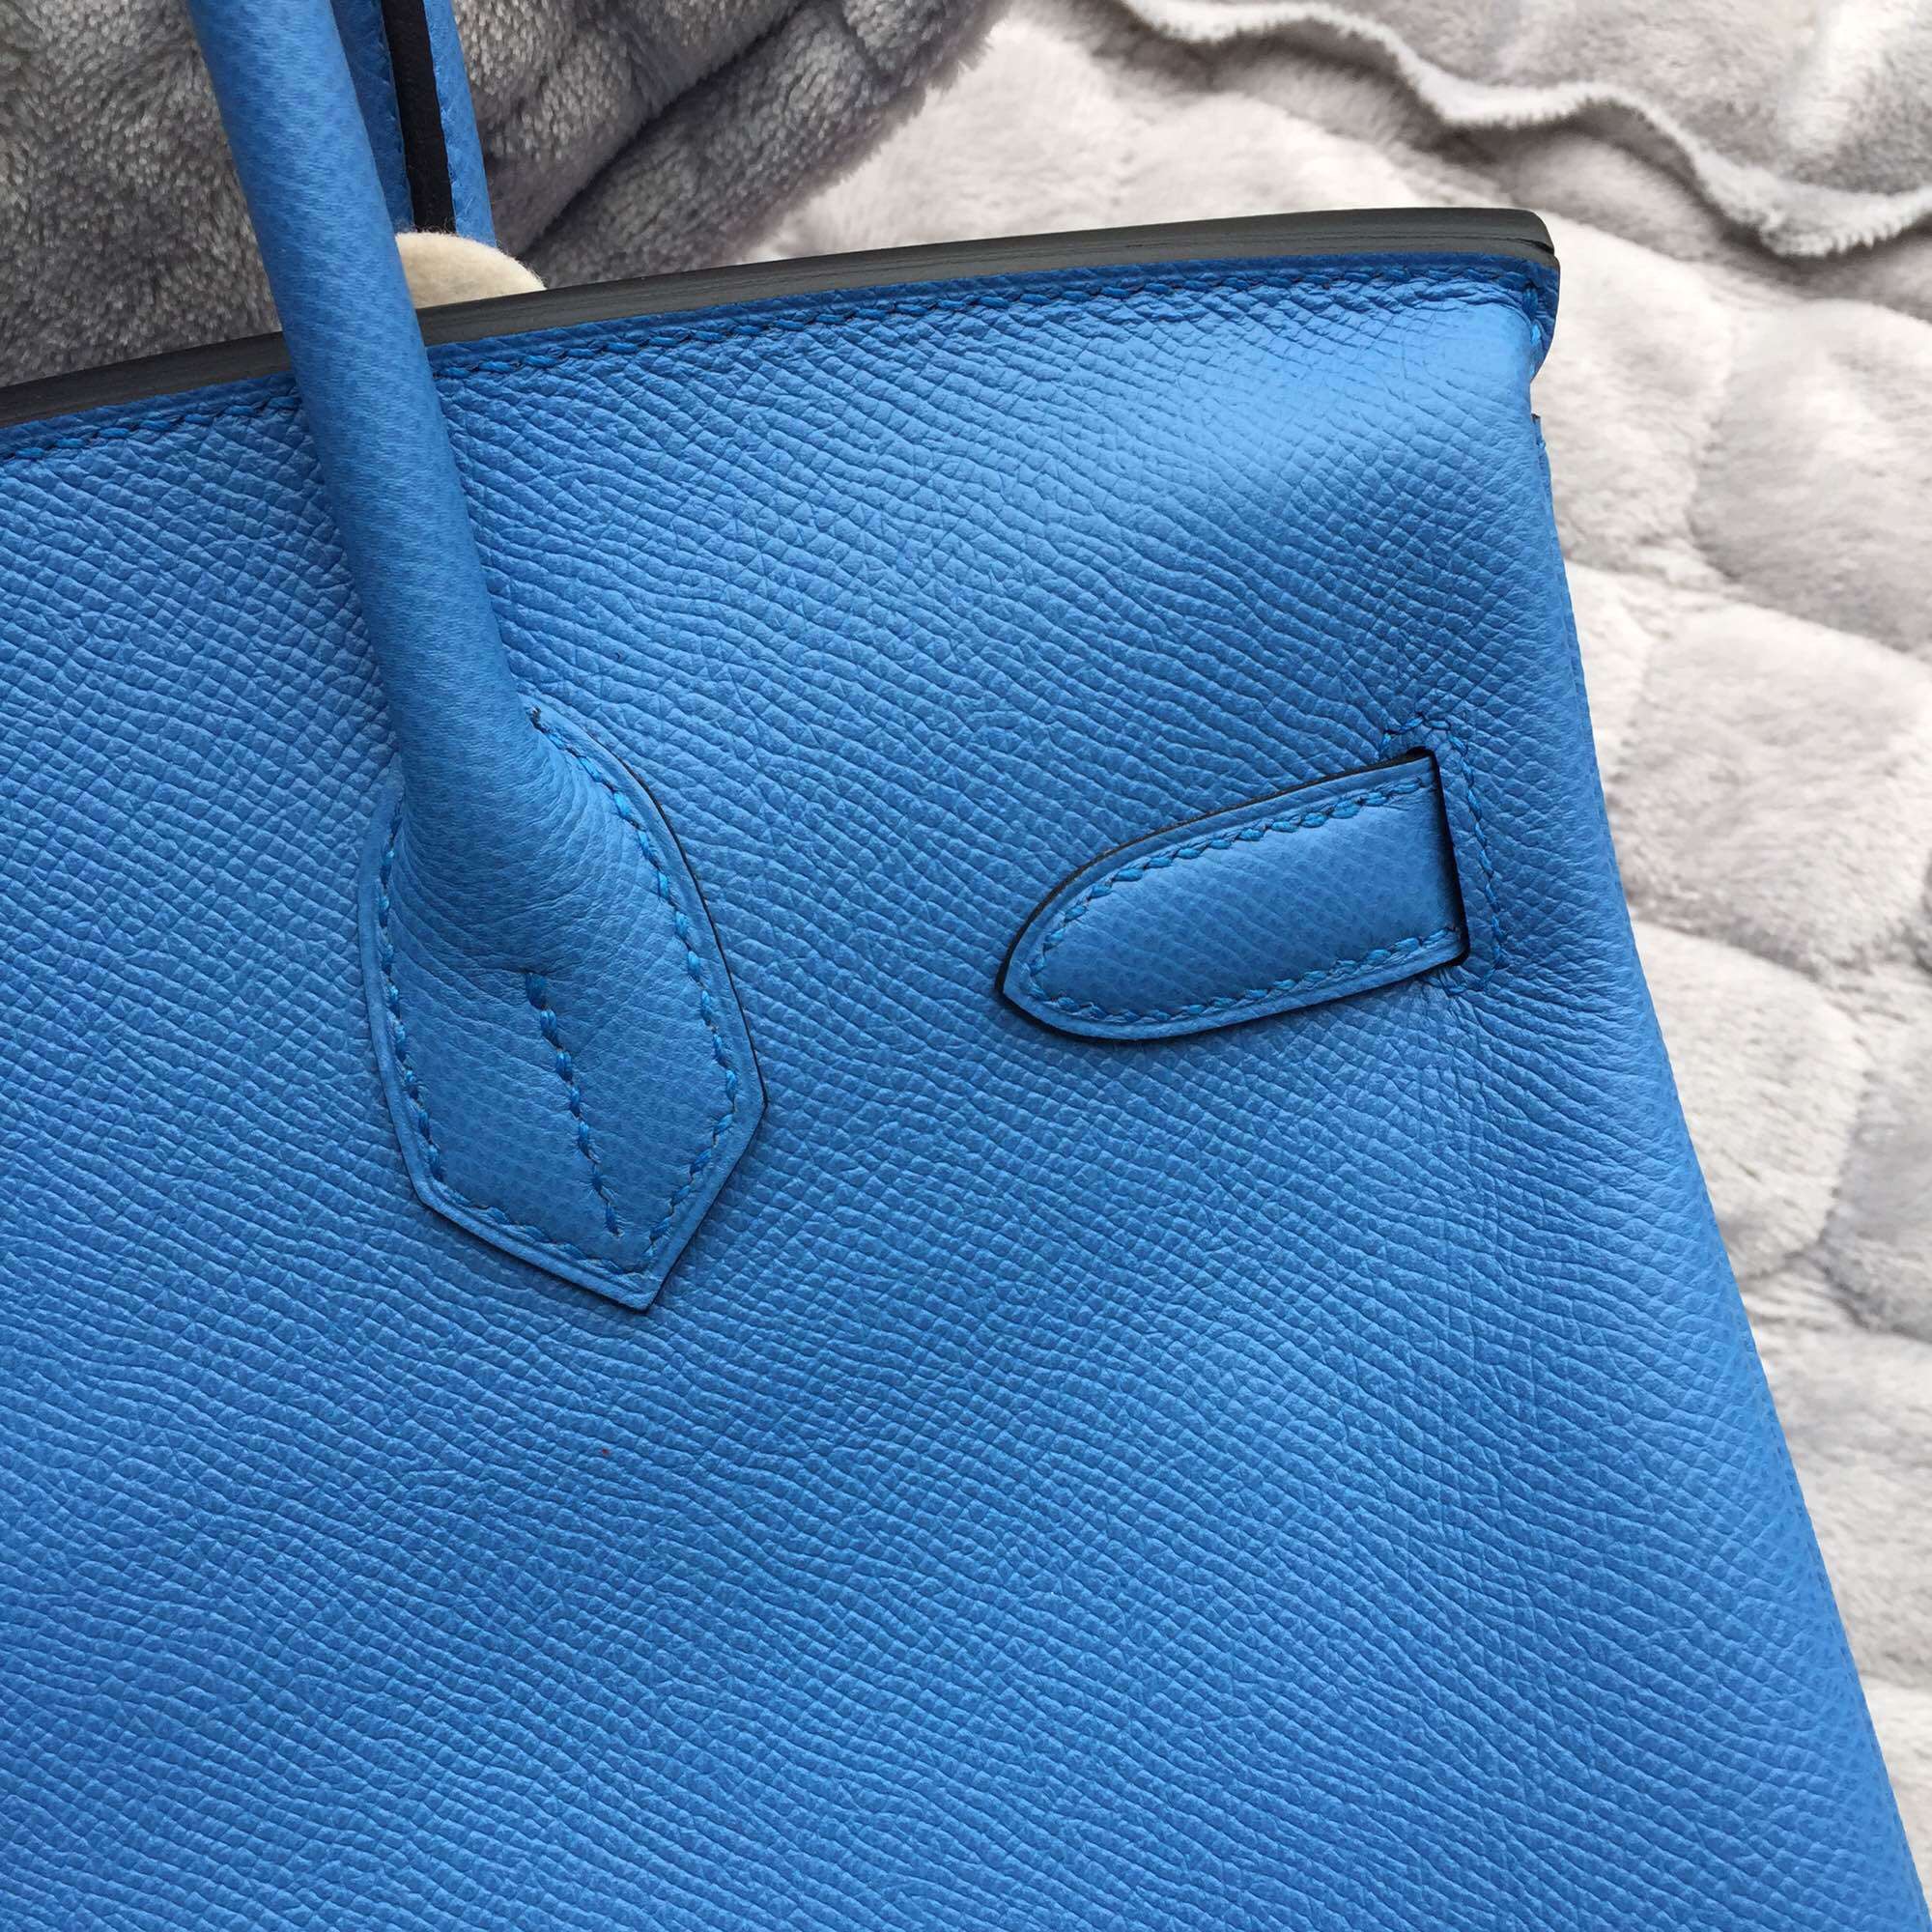 Hand Stitching 2T Blue Paradise Epsom Leather Hermes Birkin Bag 30CM Wholesale